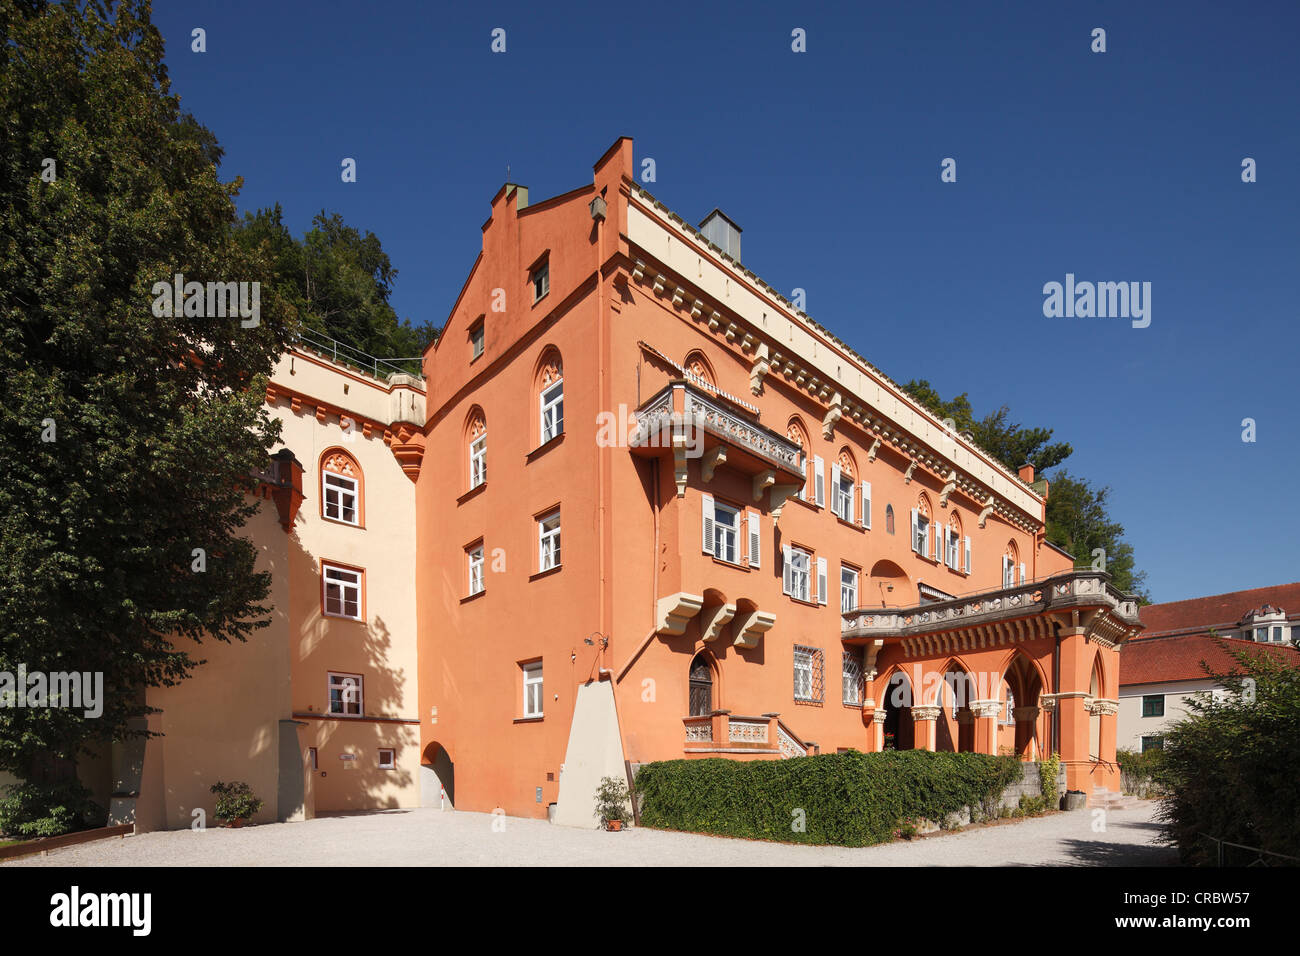 Château inférieur, Schloss Stein Château, Stein an der Traun, Chiemgau, Upper Bavaria, Bavaria, Germany, Europe Banque D'Images